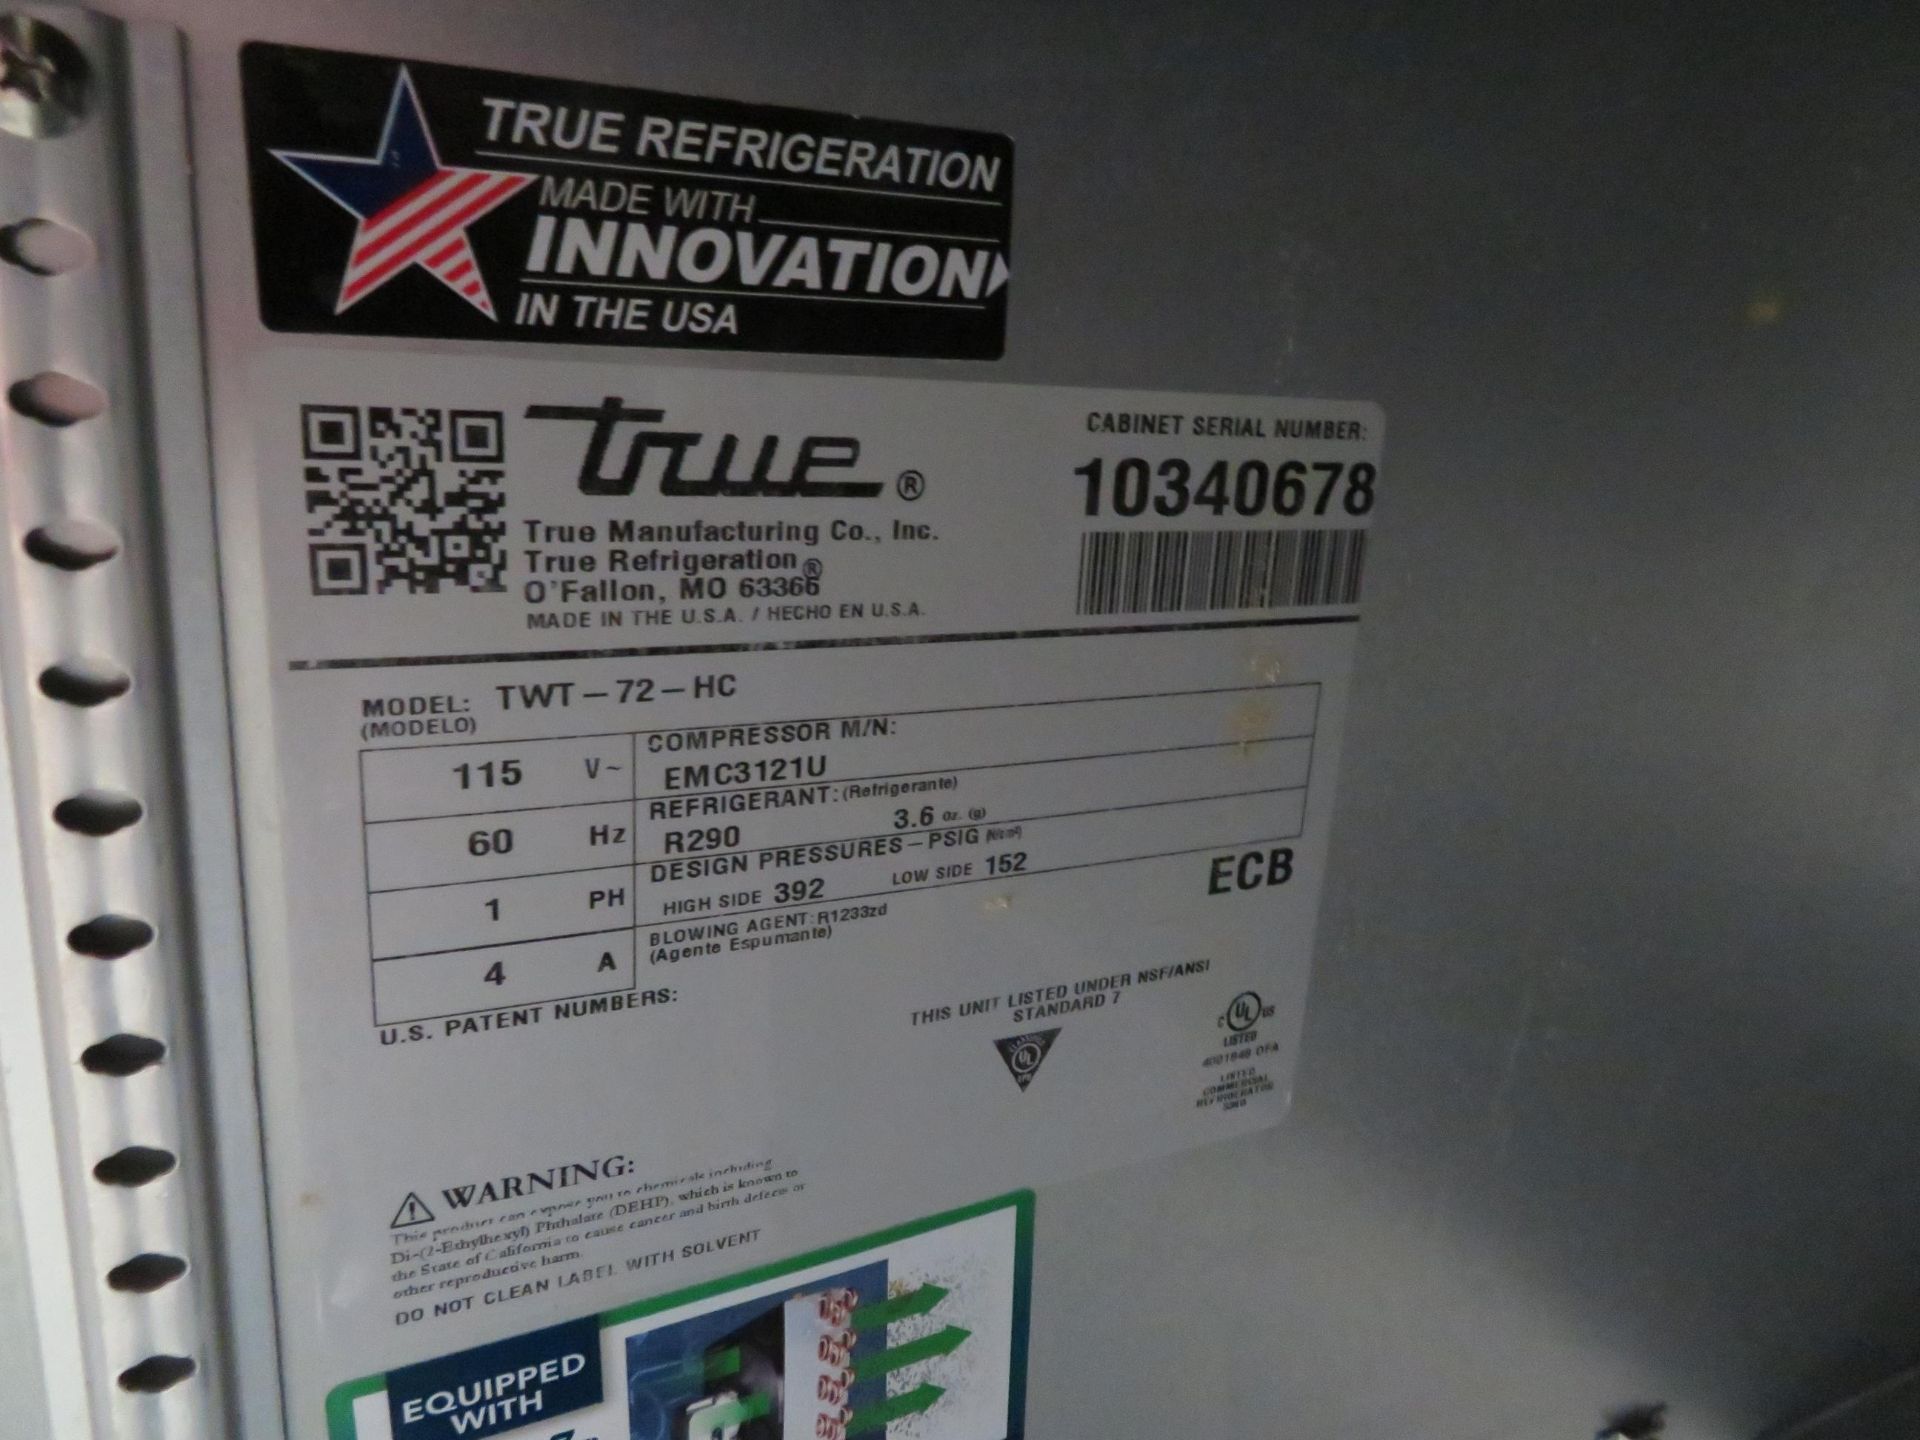 TRUE 3 door undercounter refrigerator, Mod # TWT-72-HC, approx. 72"w x 30"d x 36"h - Image 3 of 3